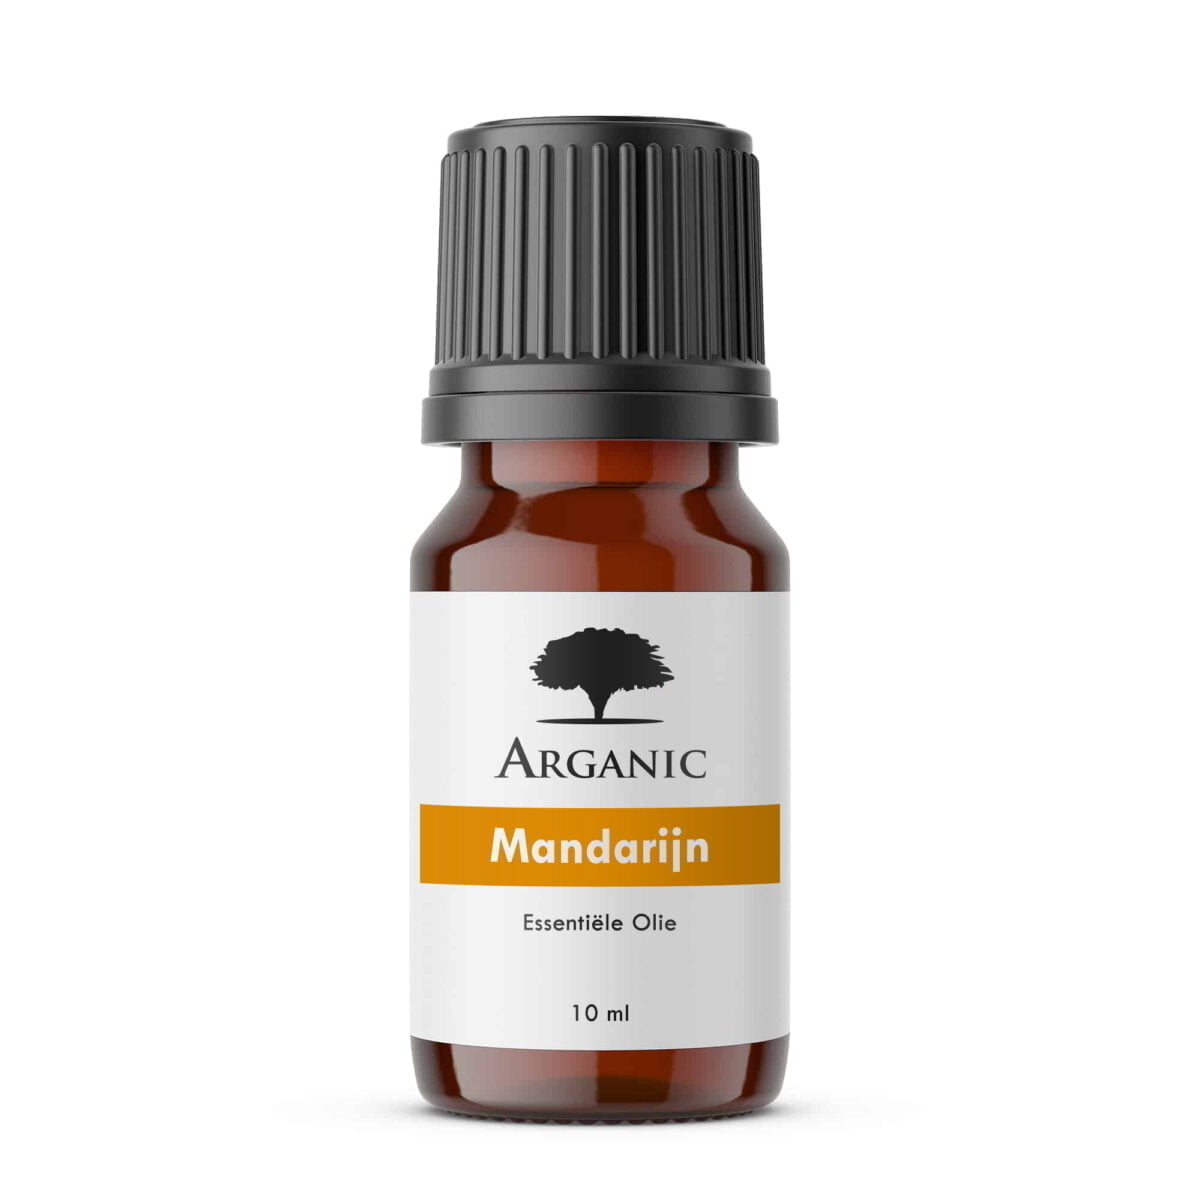 Arganic Mandarijn - Etherische Olie - 10ml